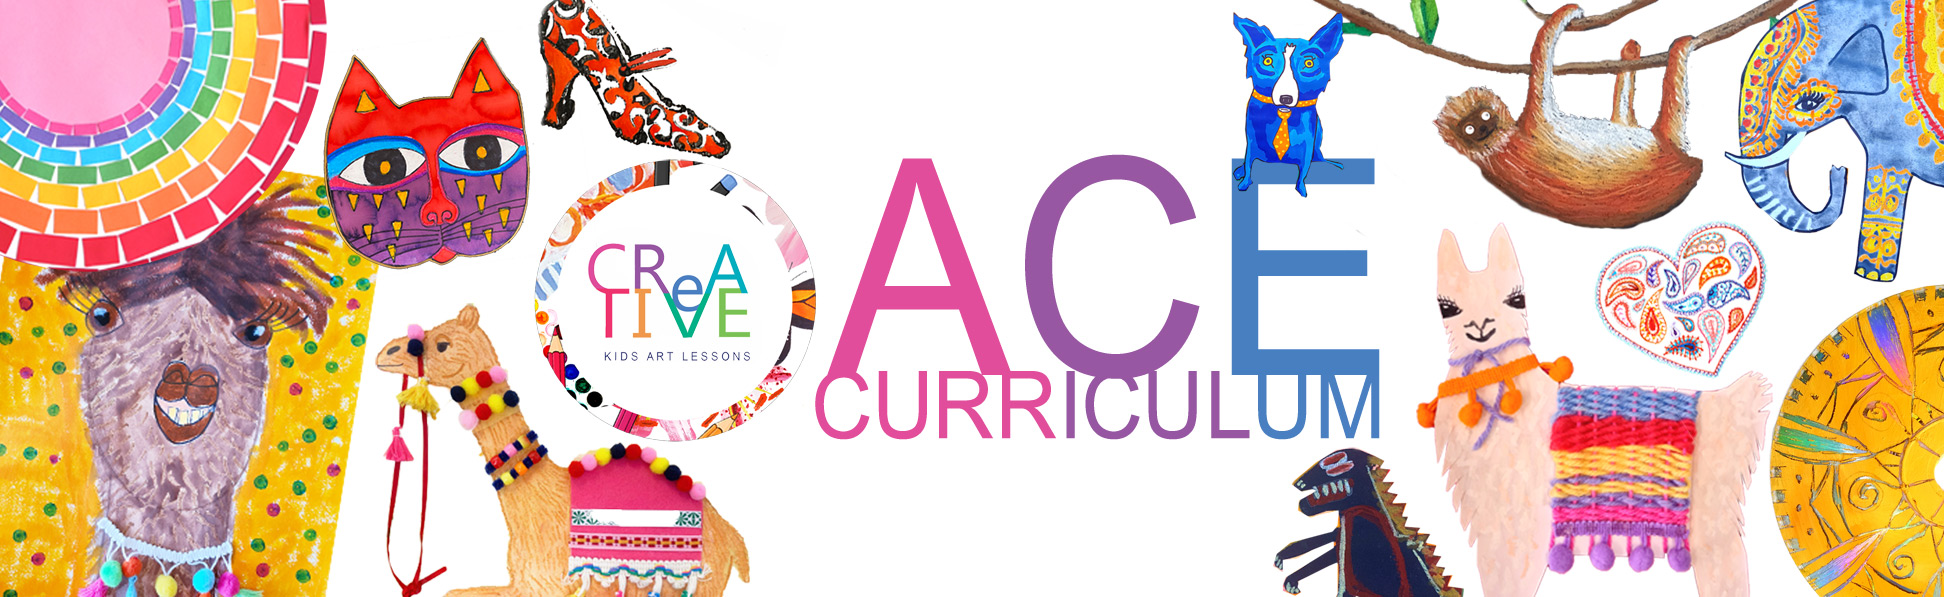 ACE art curriculum